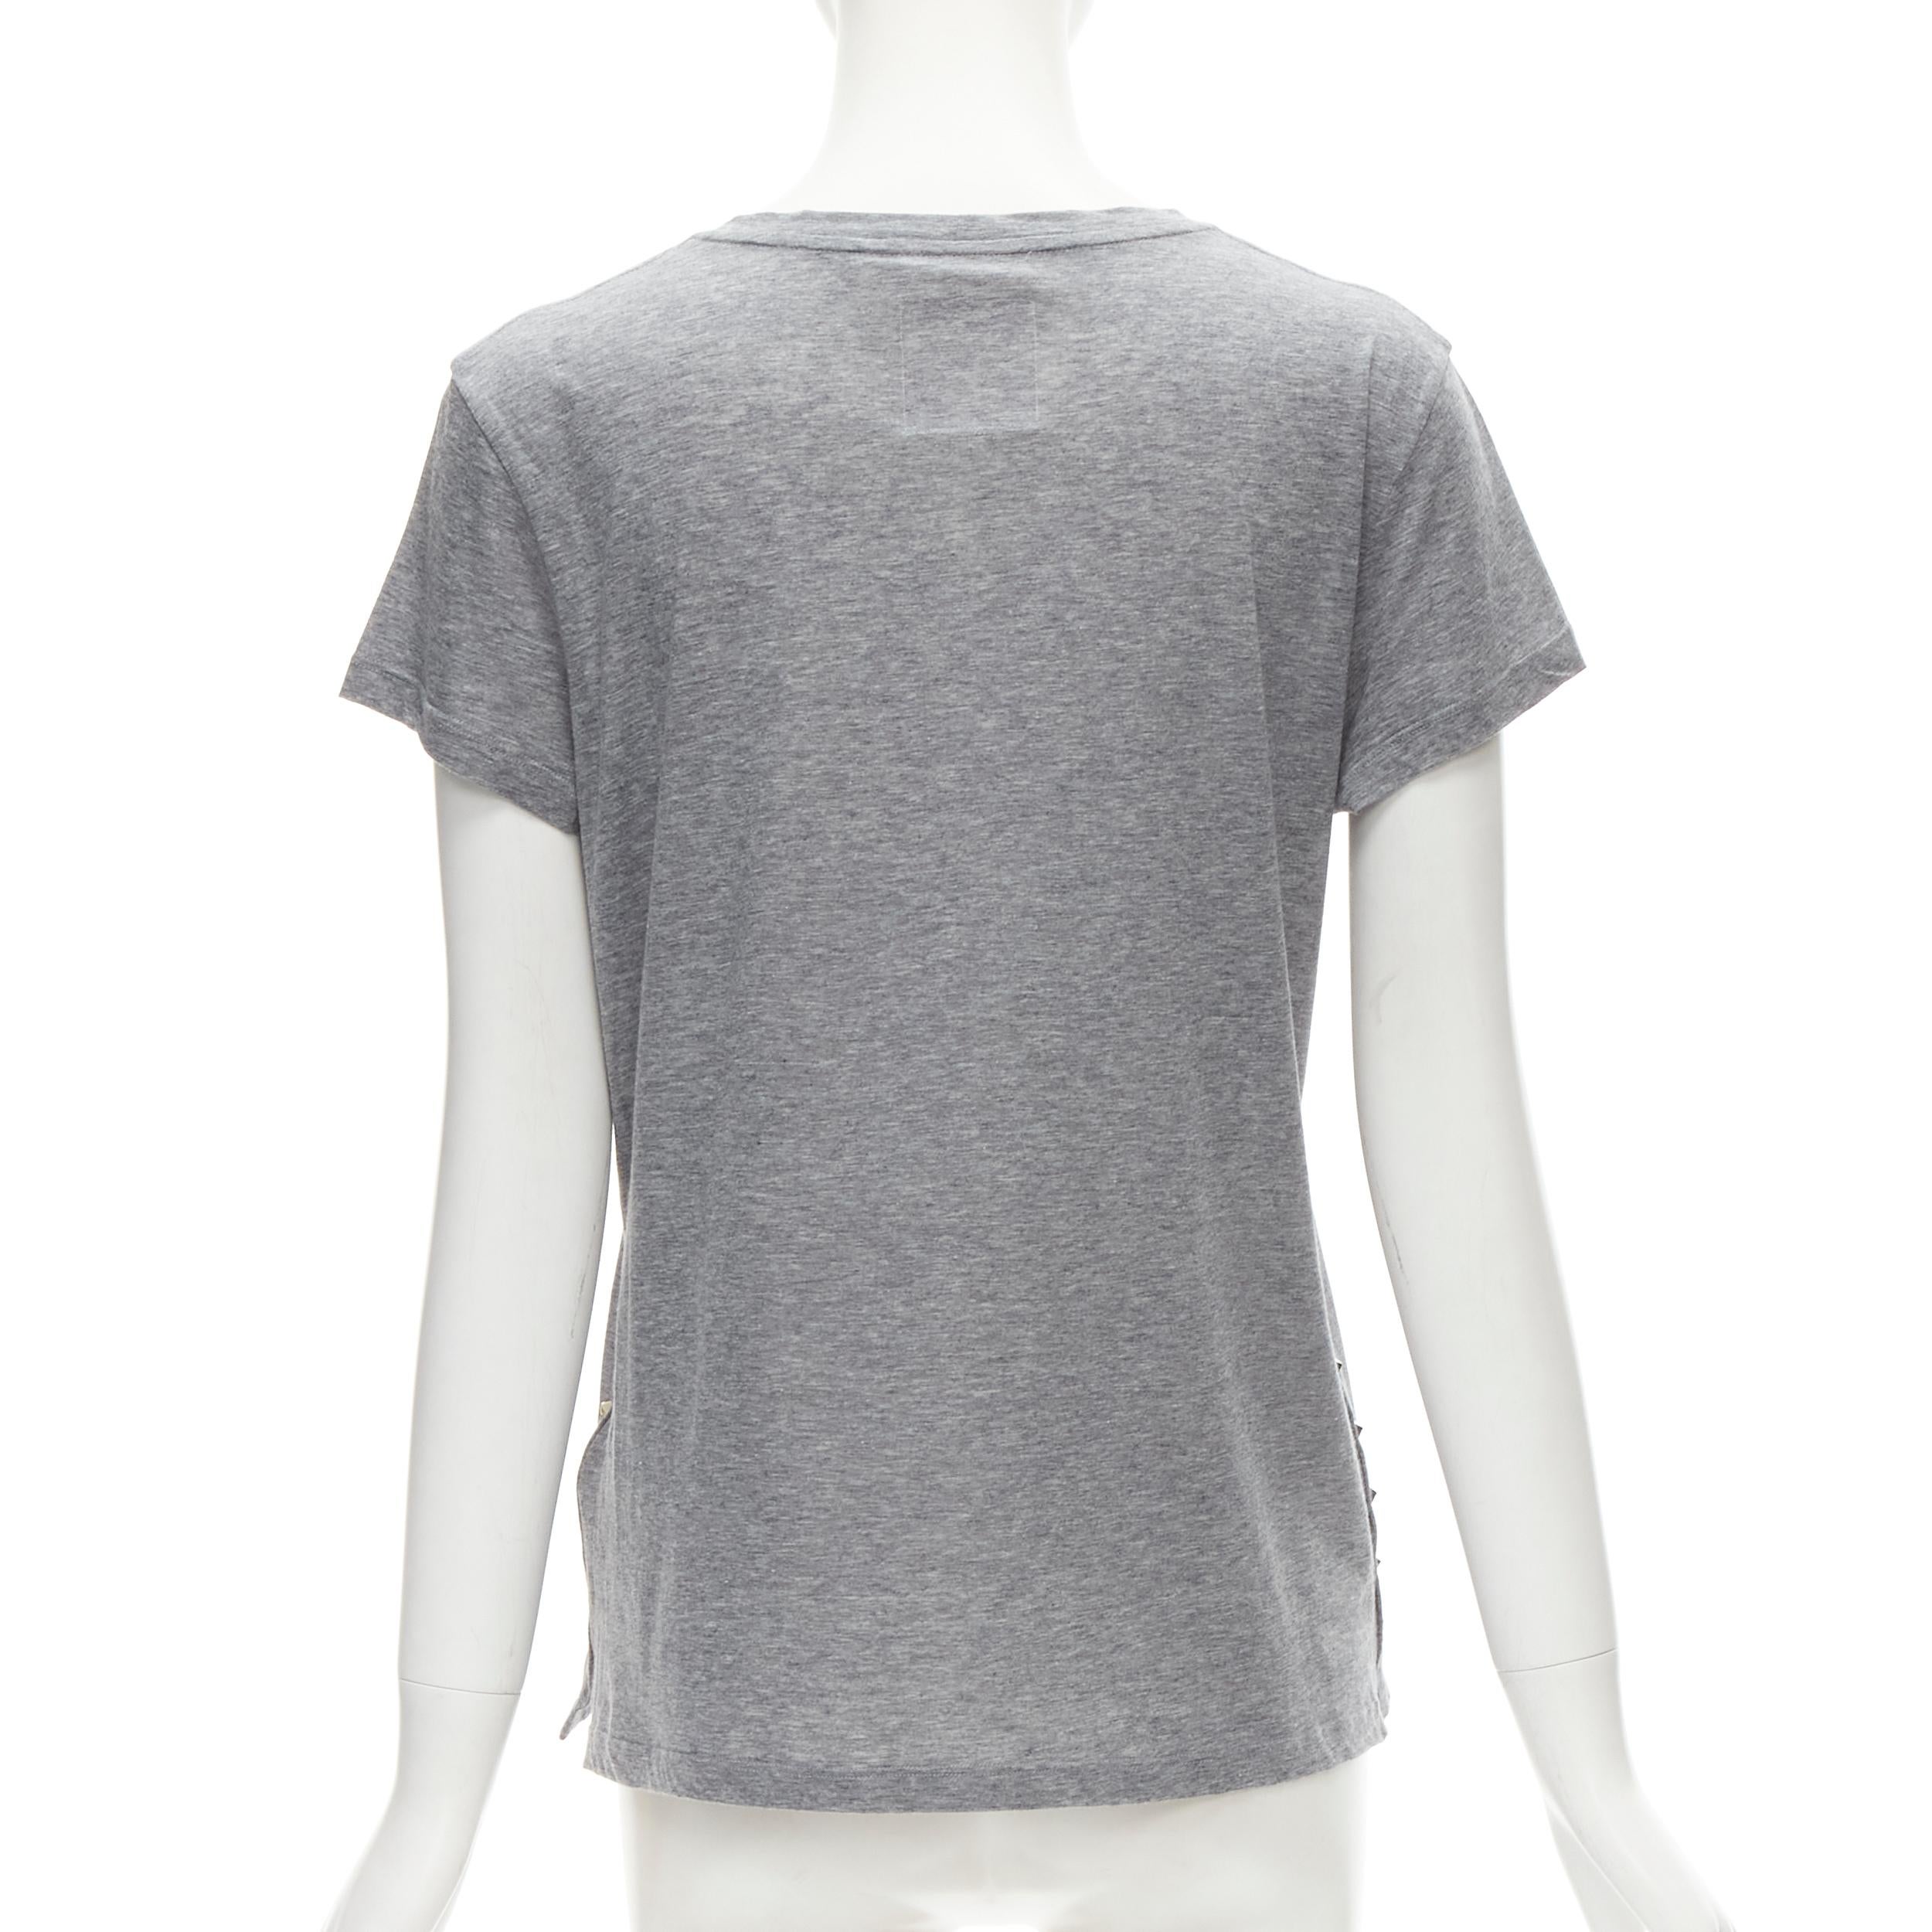 VALENTINO Rockstud 100% cotton grey pyramind spike stud side tshirt S For Sale 1